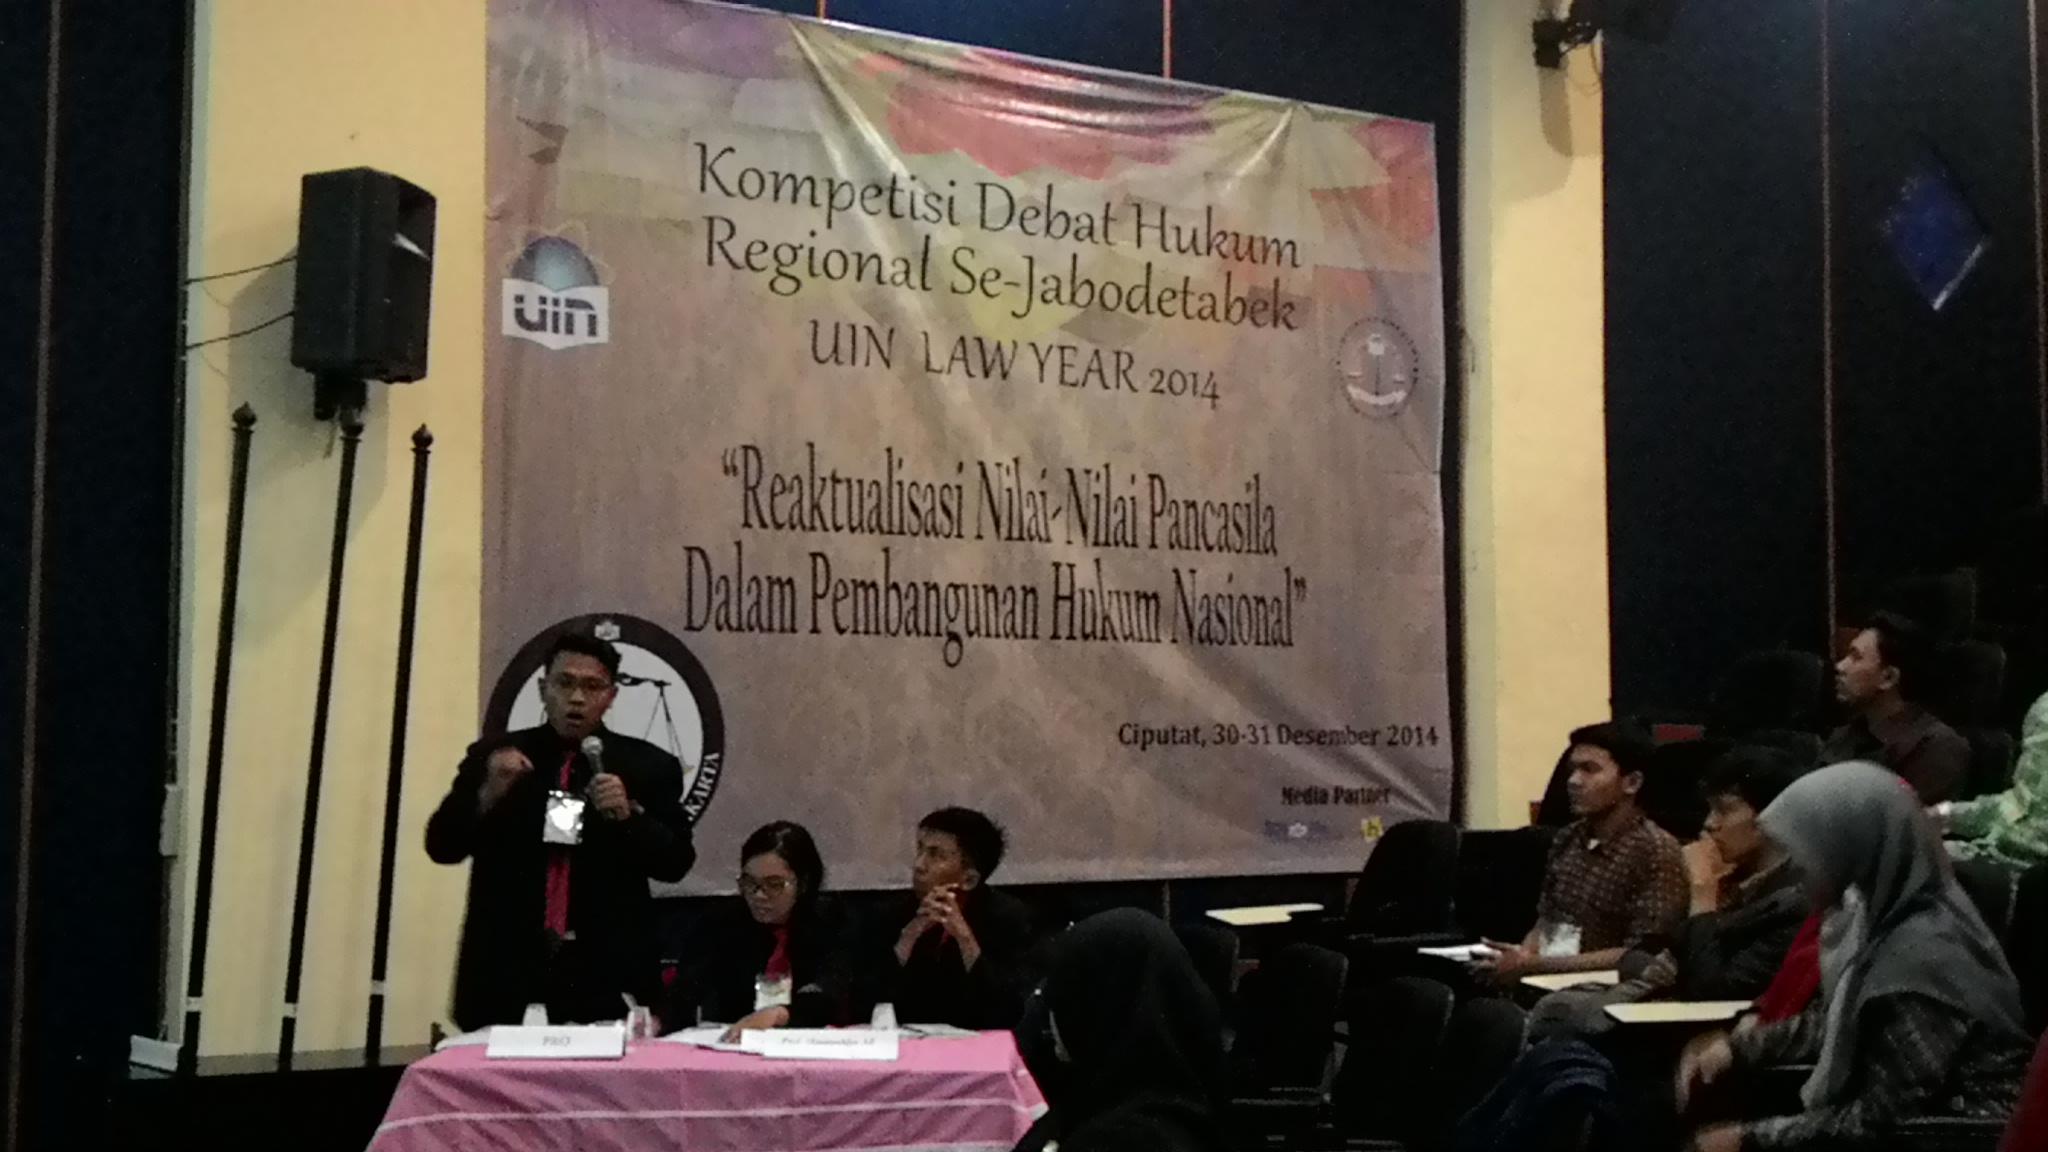 Suasana final kompetisi debat UIN Lawyear 2014 di Kampus UIN, Rabu (31/12). Foto: M-22 